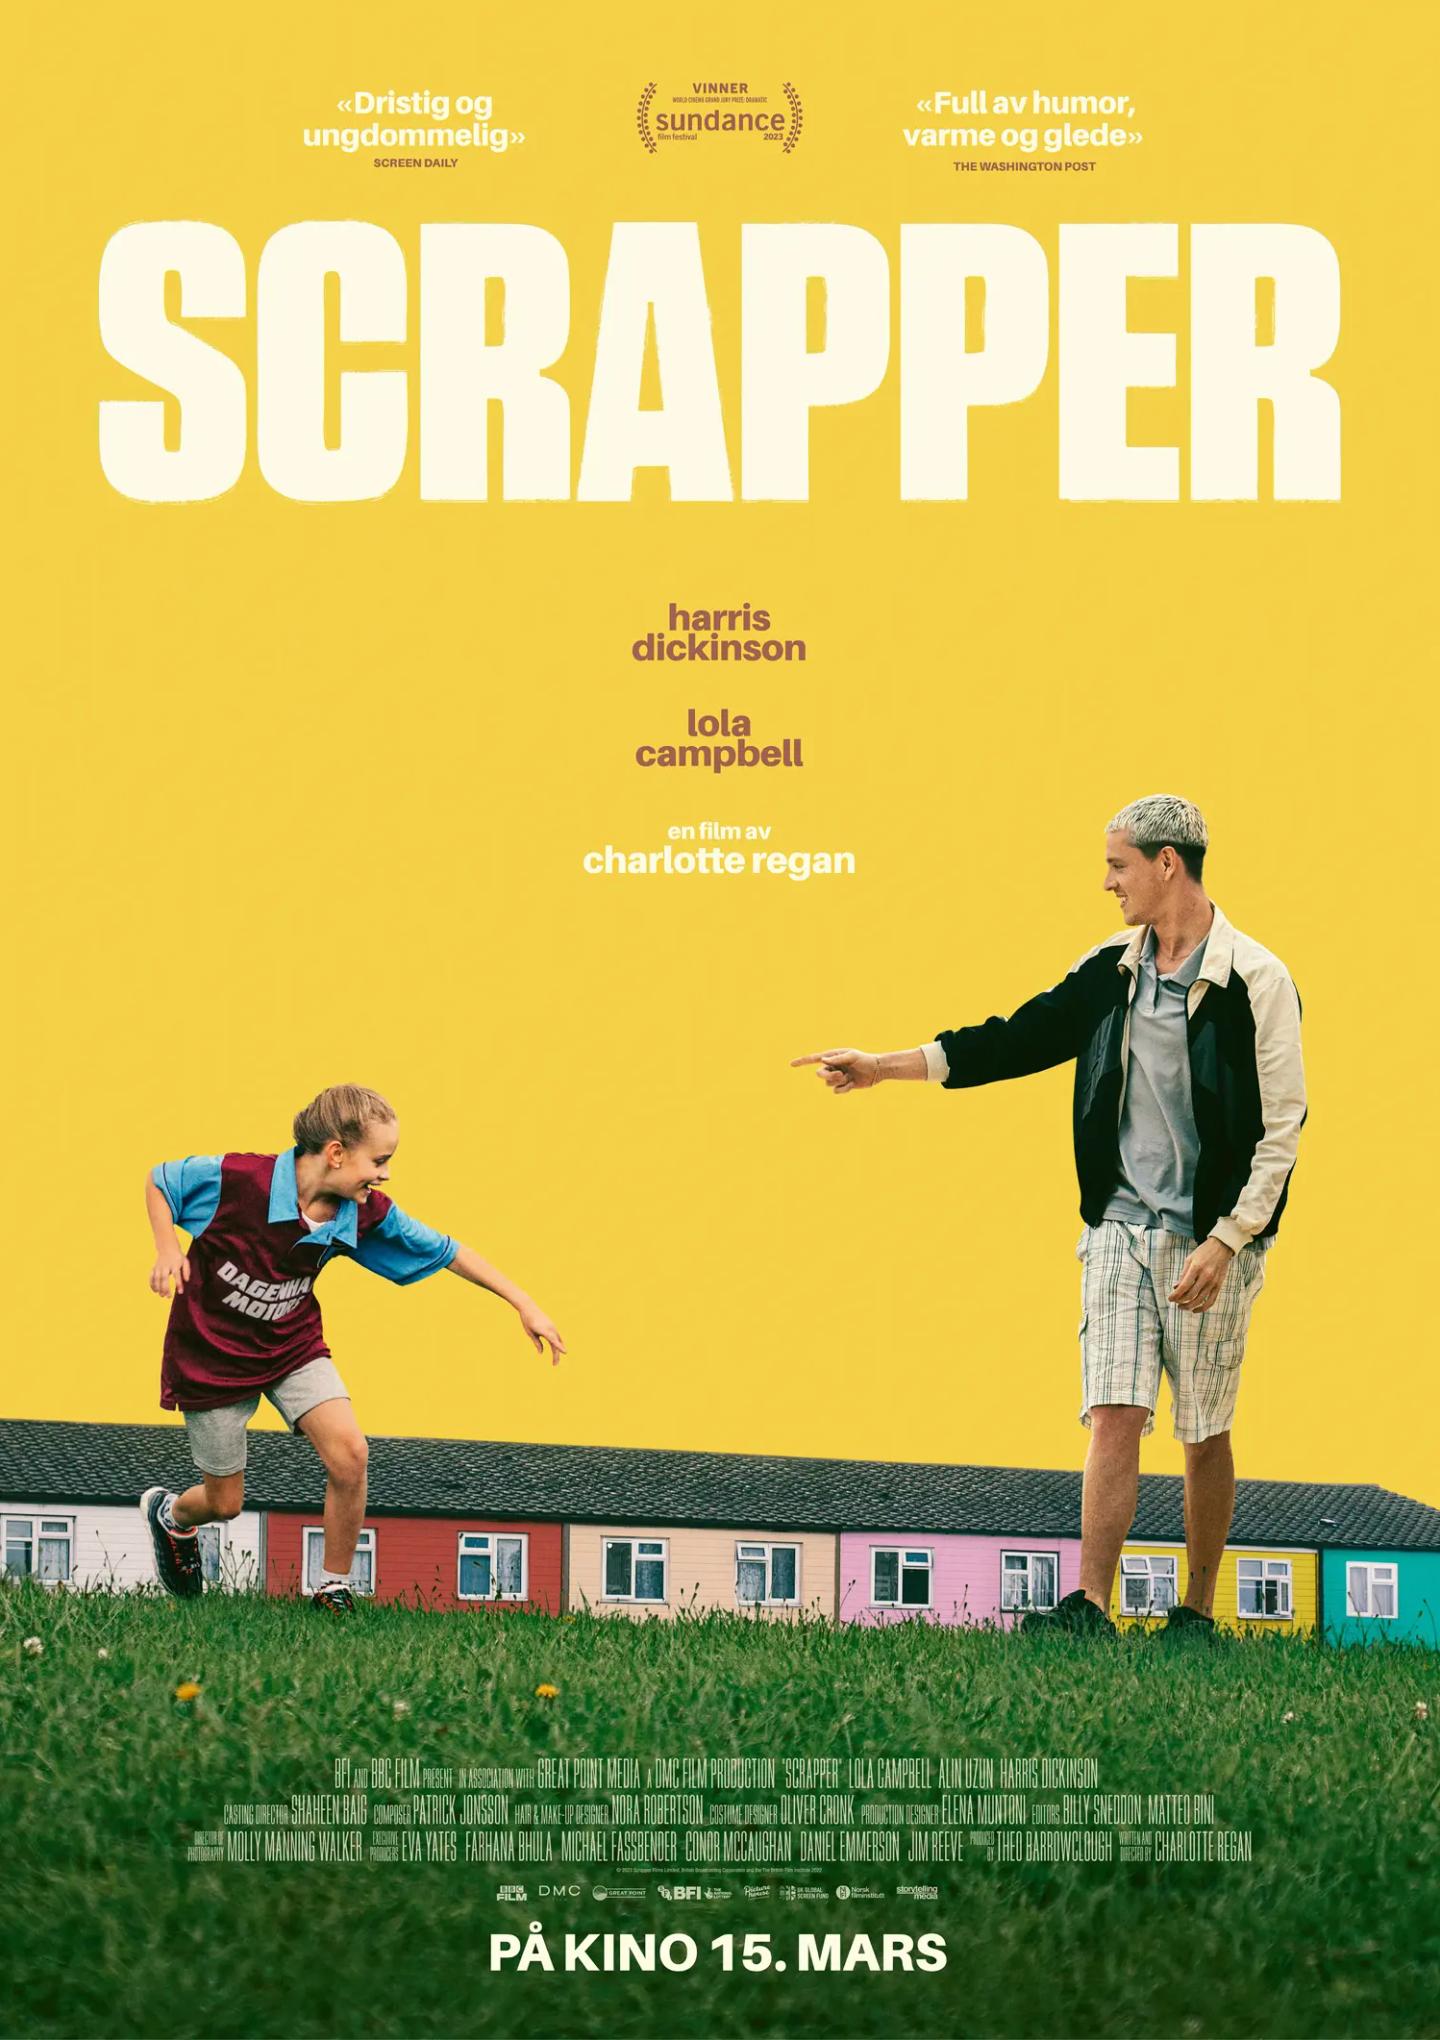 Plakat for 'Scrapper'